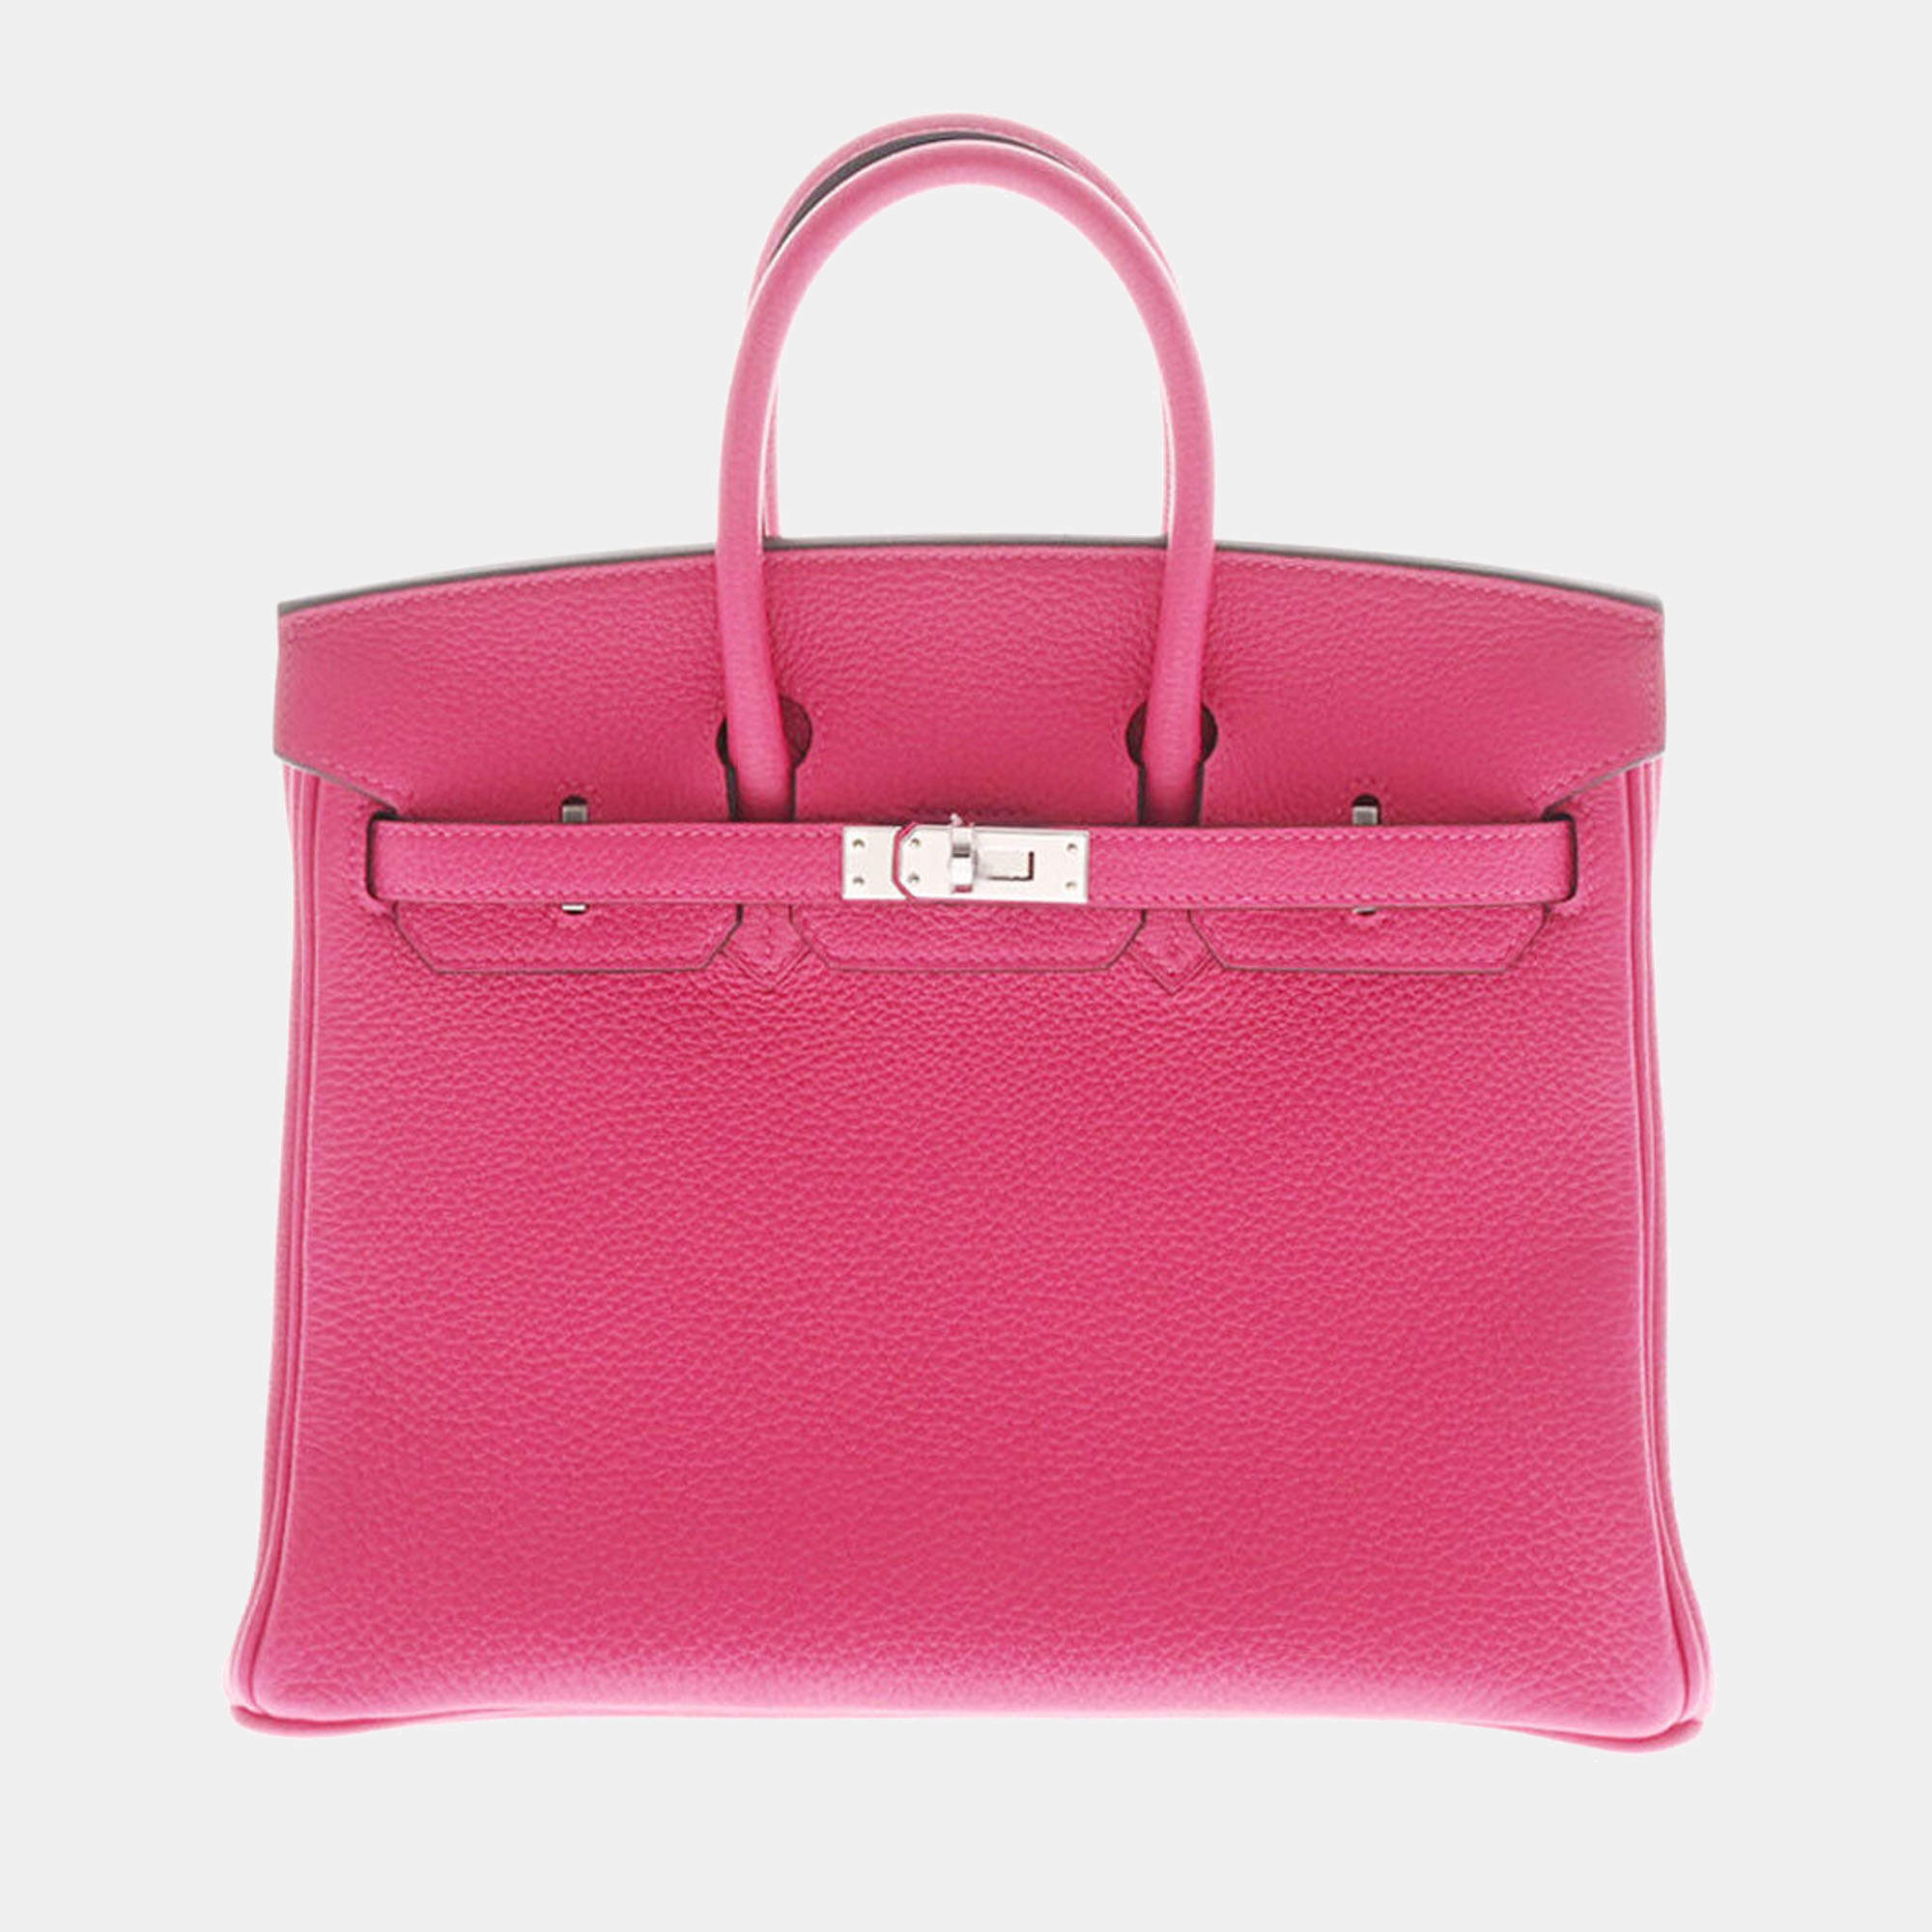 Hermes Pink Togo Leather Palladium Hardware Birkin 25 Bag Hermes | The ...